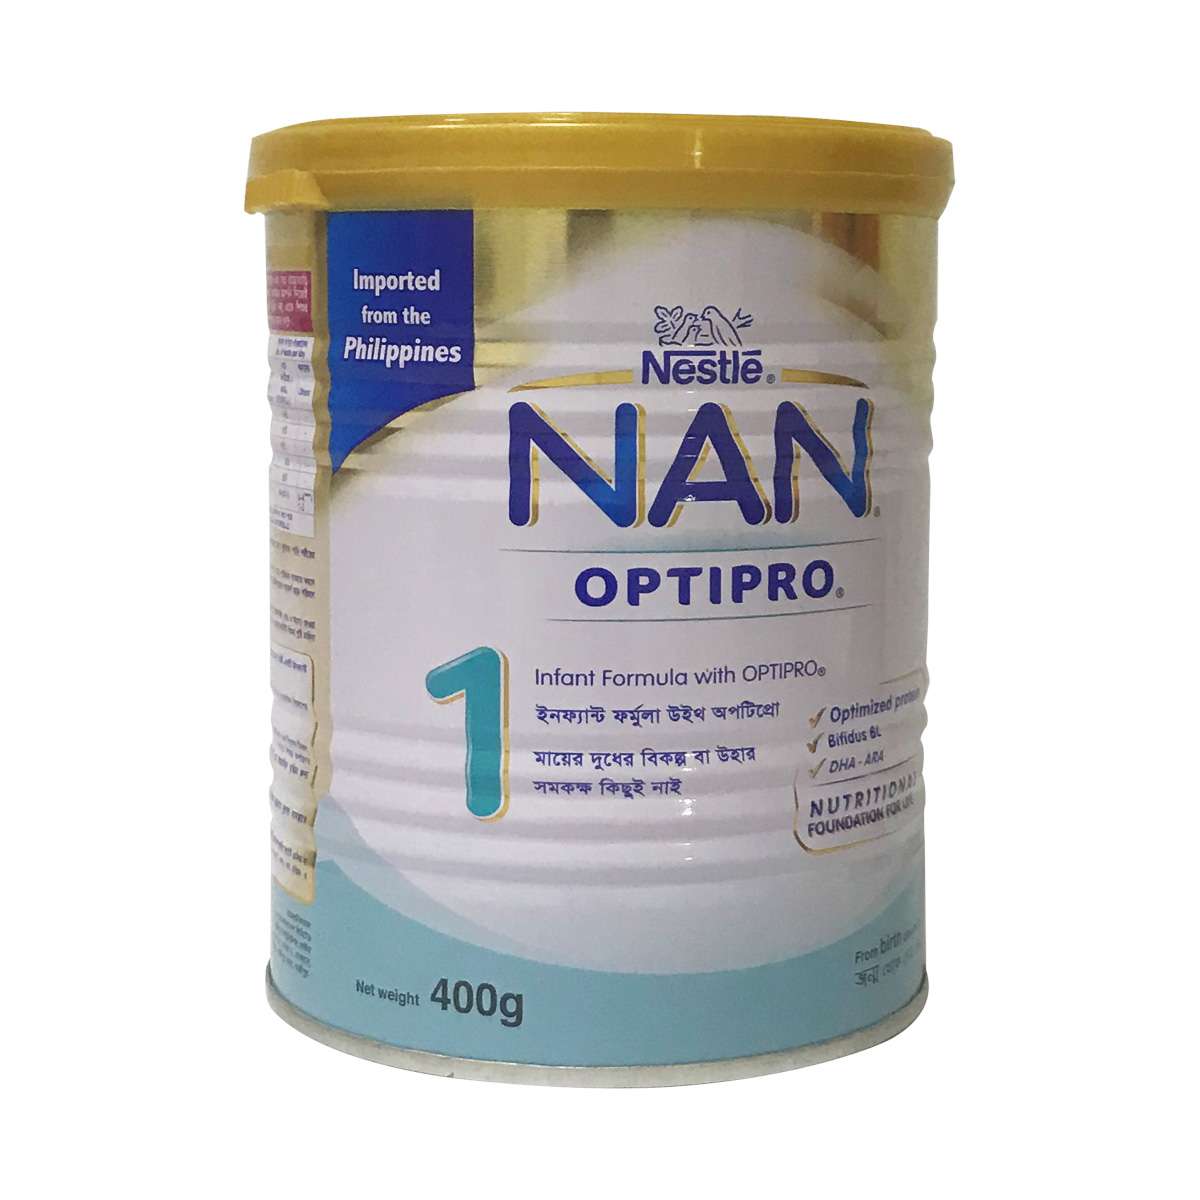 Nestle Nan Optipro 1 400g | Bangladesh largest Market Place for ...